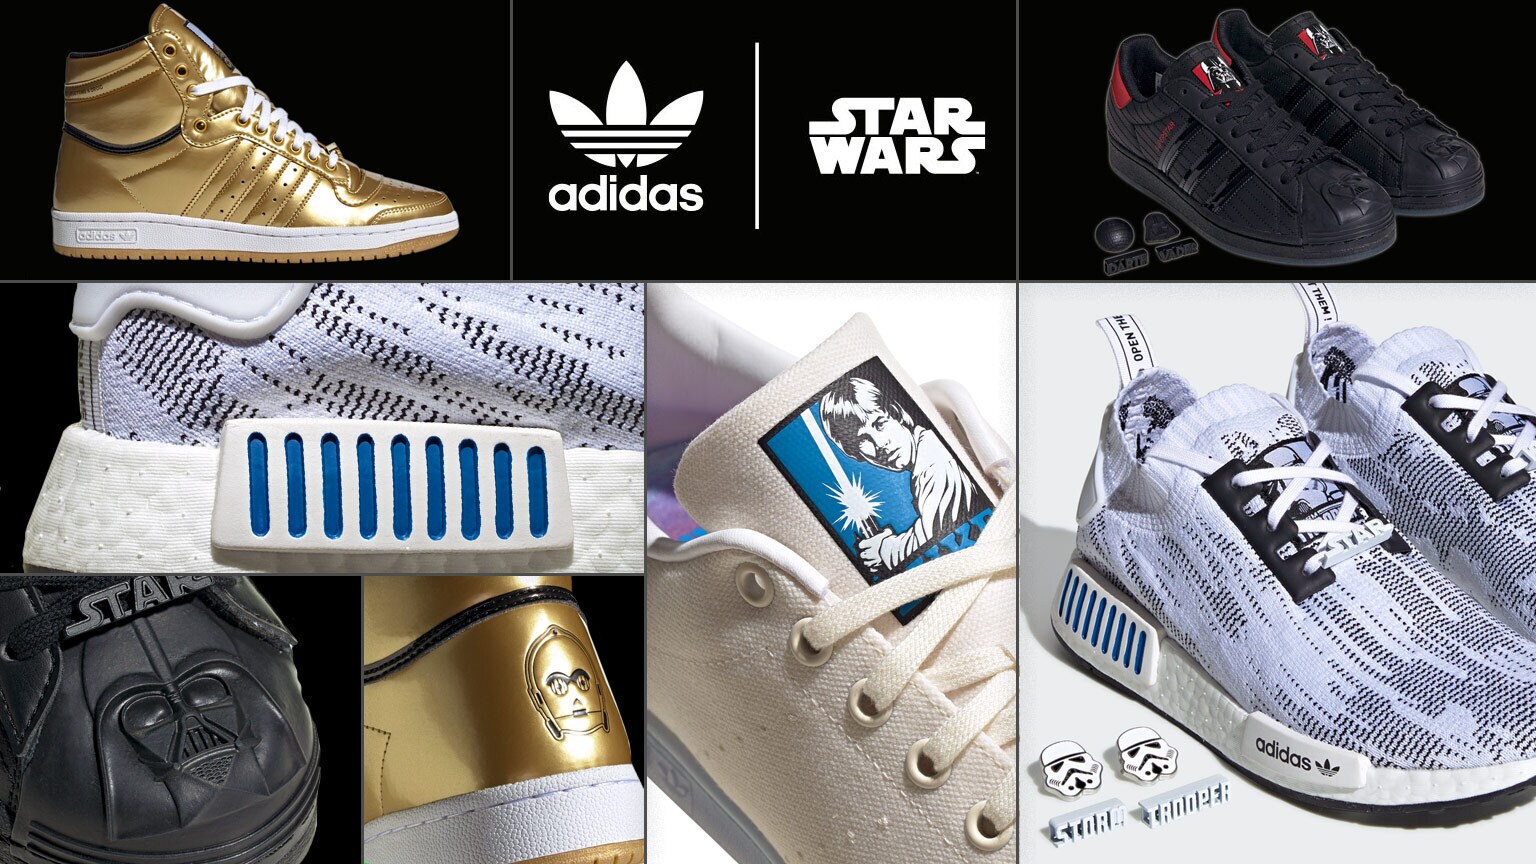 Adidas Brings Star Wars Style Sneaker Galaxy StarWars.com